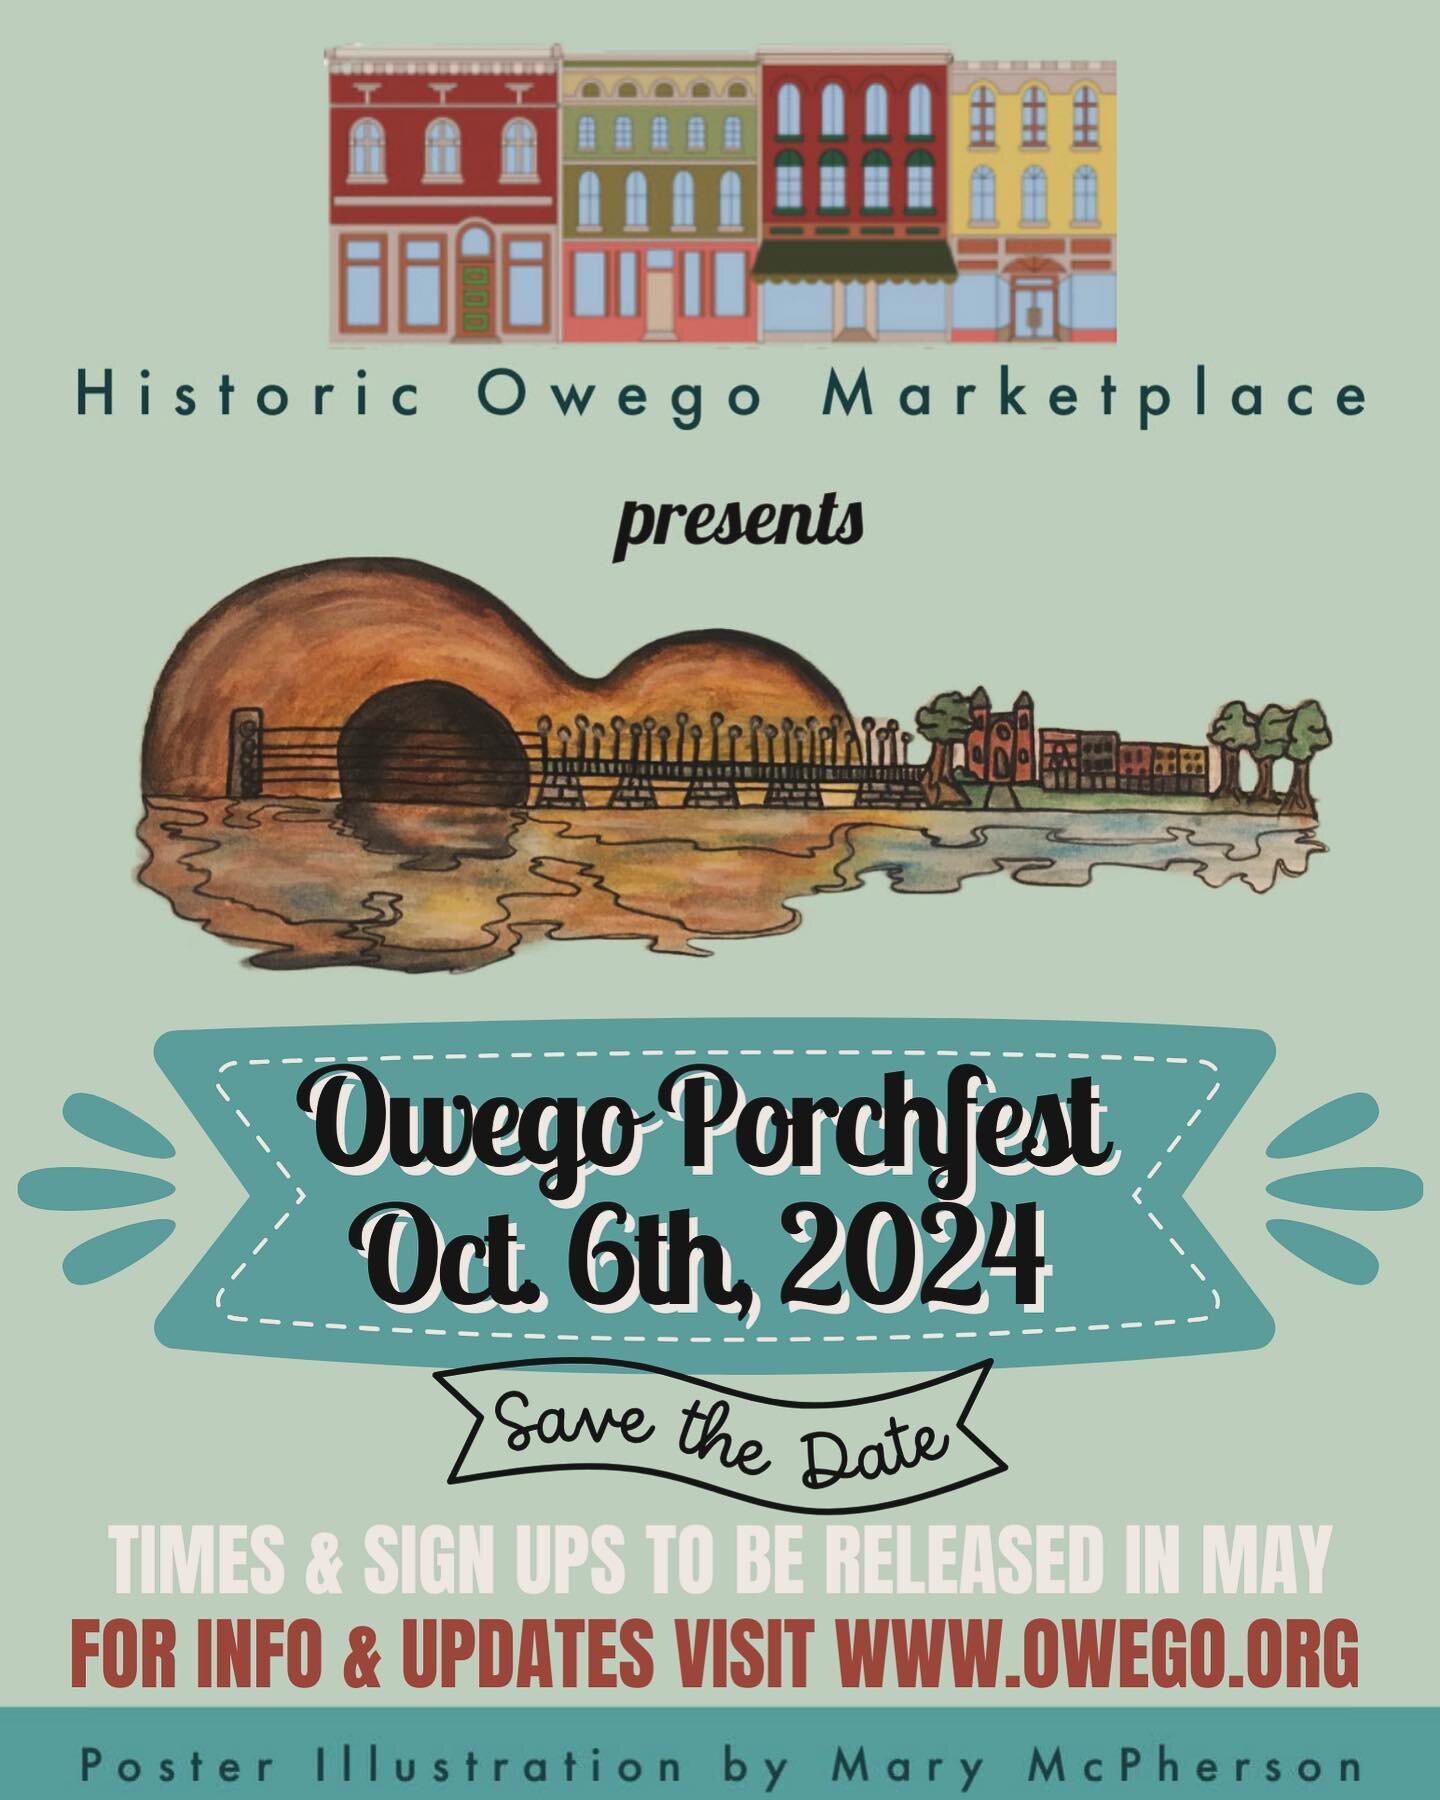 Save the date for our 3rd Annual Owego Porchfest!  #historicowegomarketplace  #owegony  #owegoporchfest #owegoporchfest2024